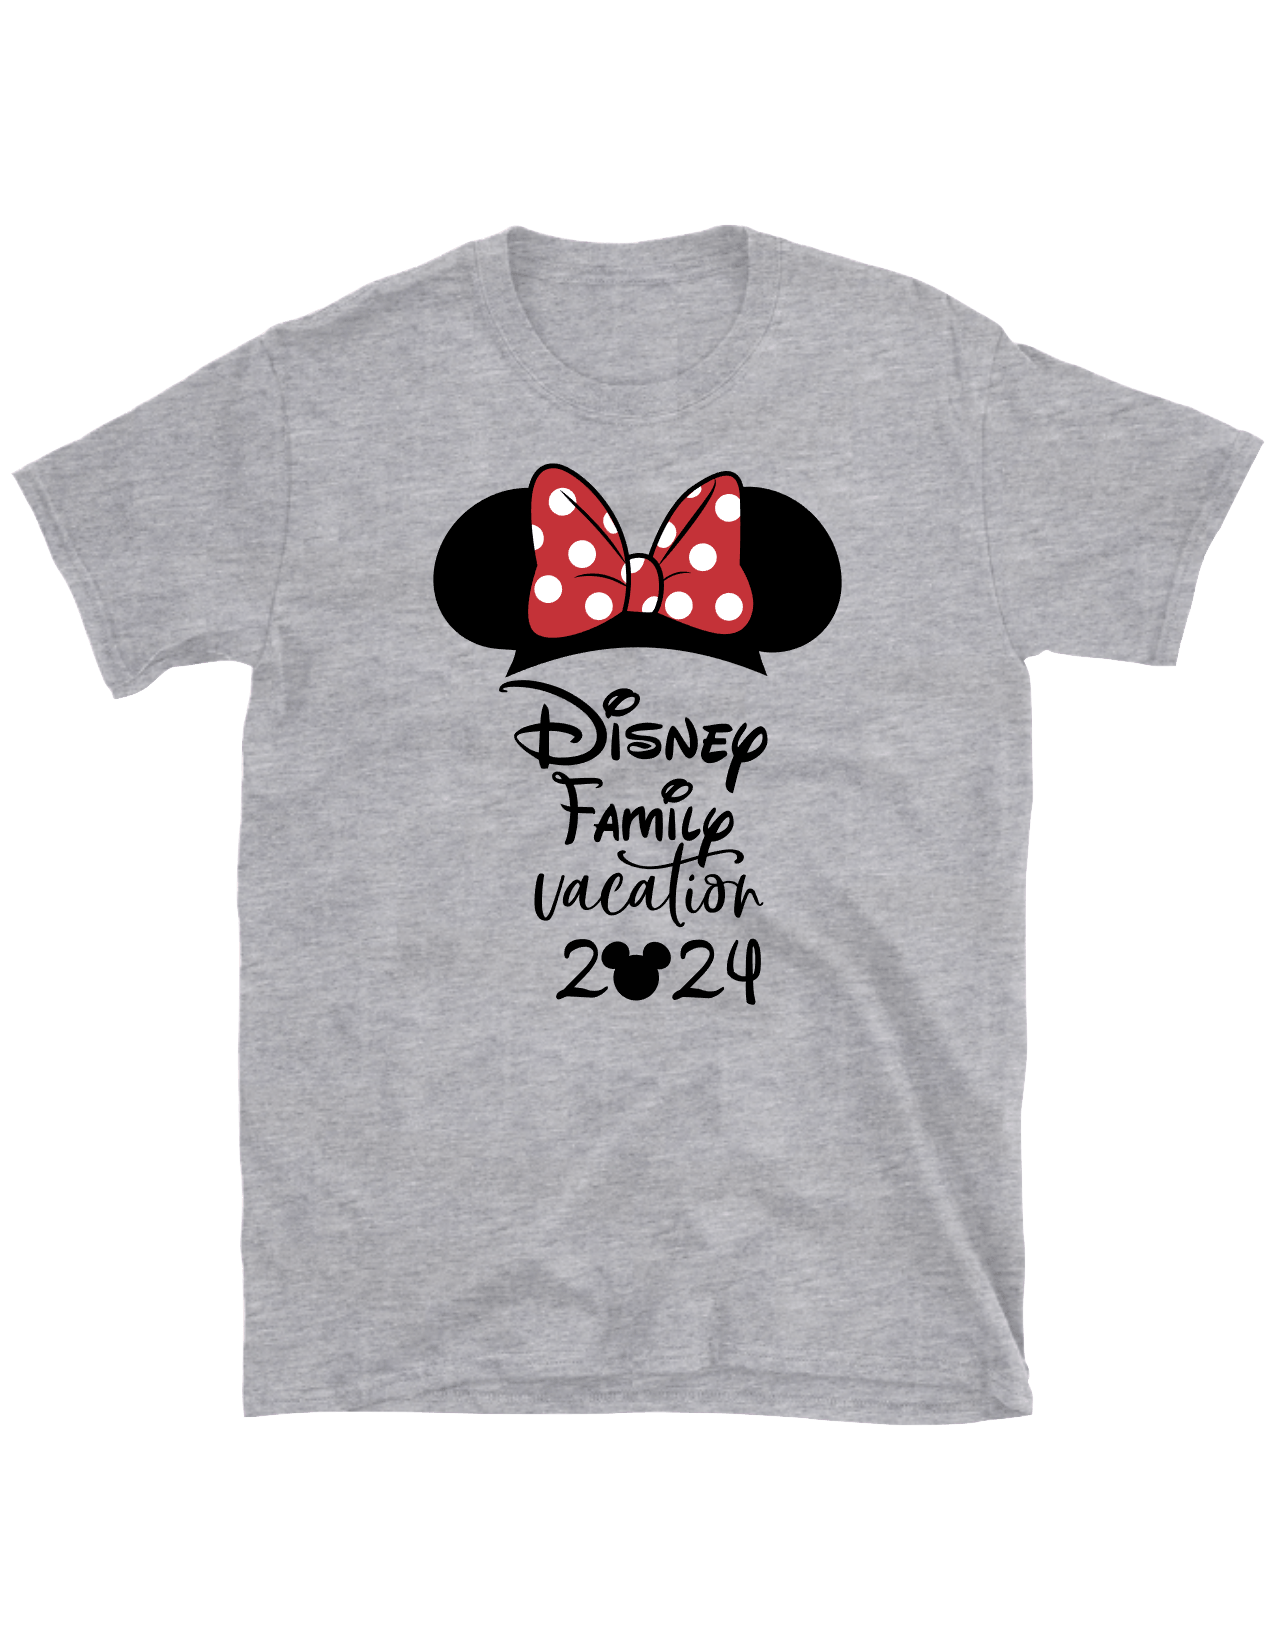 Disney Family Trip Shirts with Custom Names - smuniqueshirts